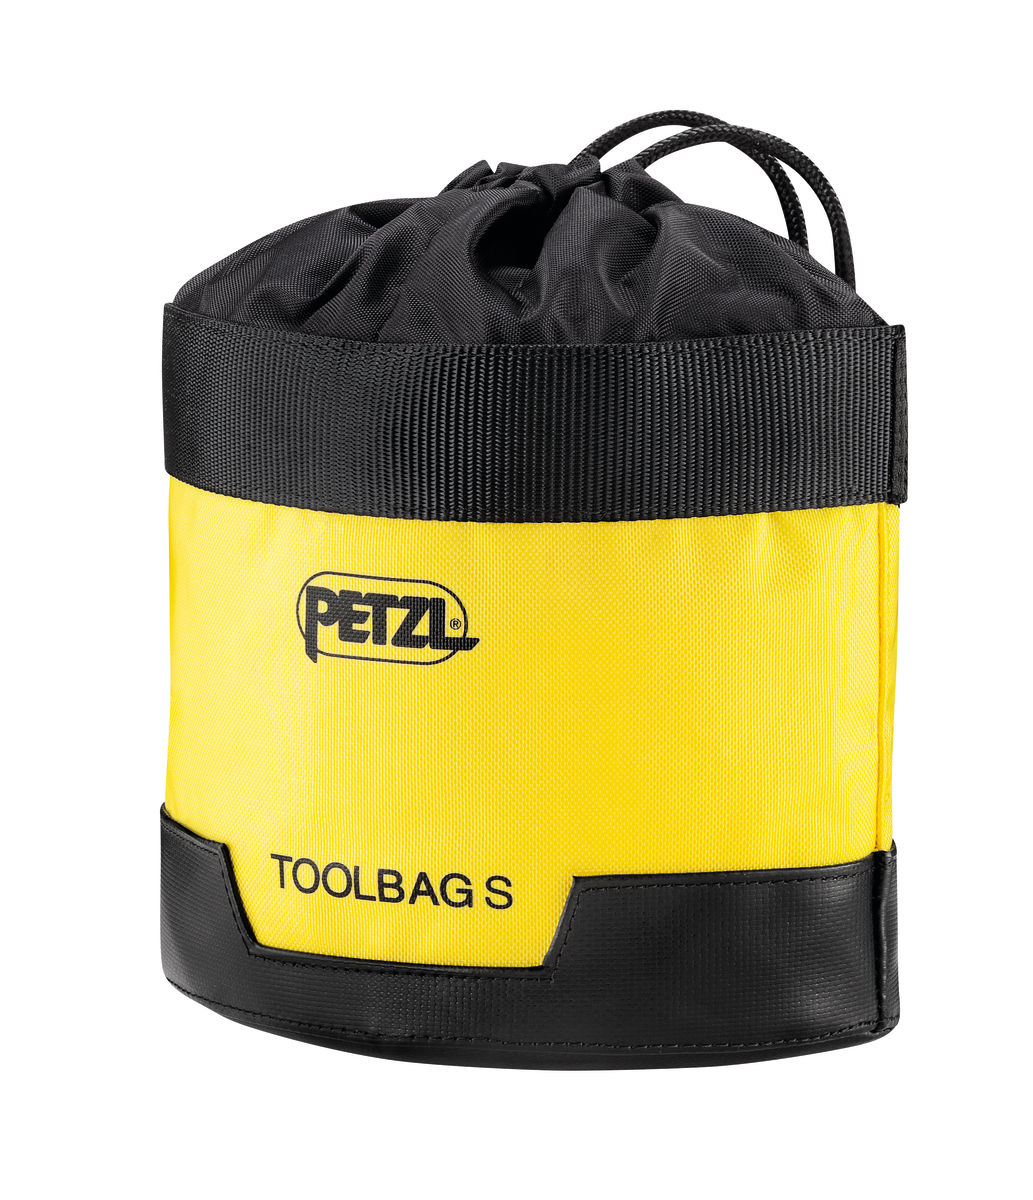 Petzl - Werkzeugtasche Toolbag